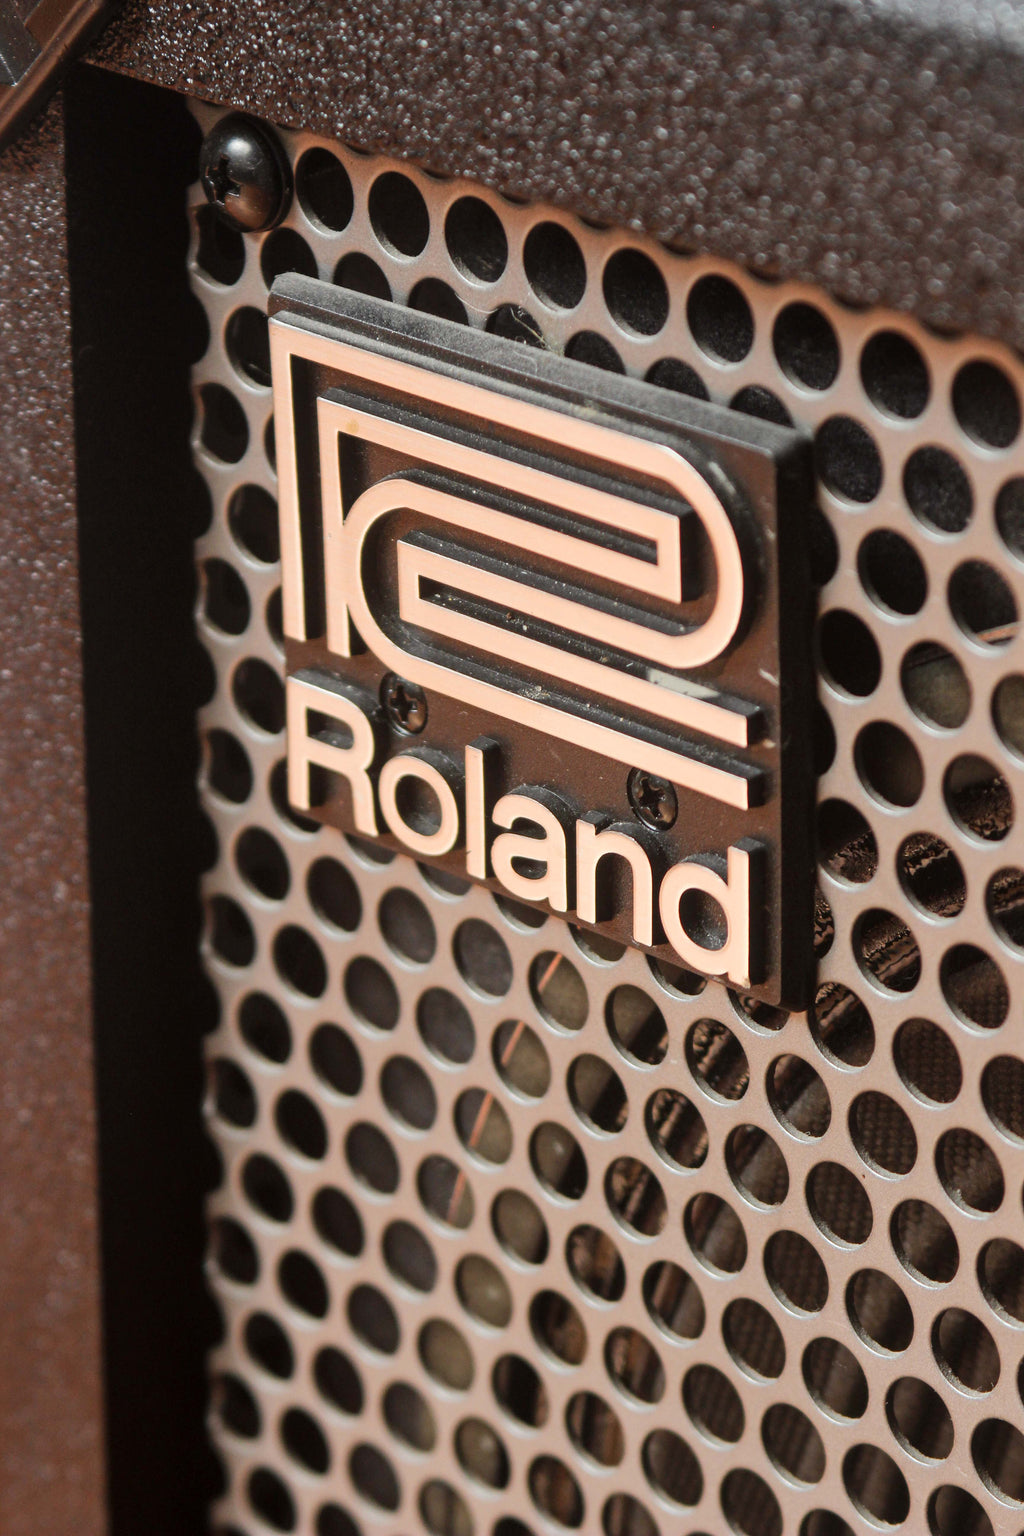 Roland Cube30X 1x10" Guitar Combo Amp